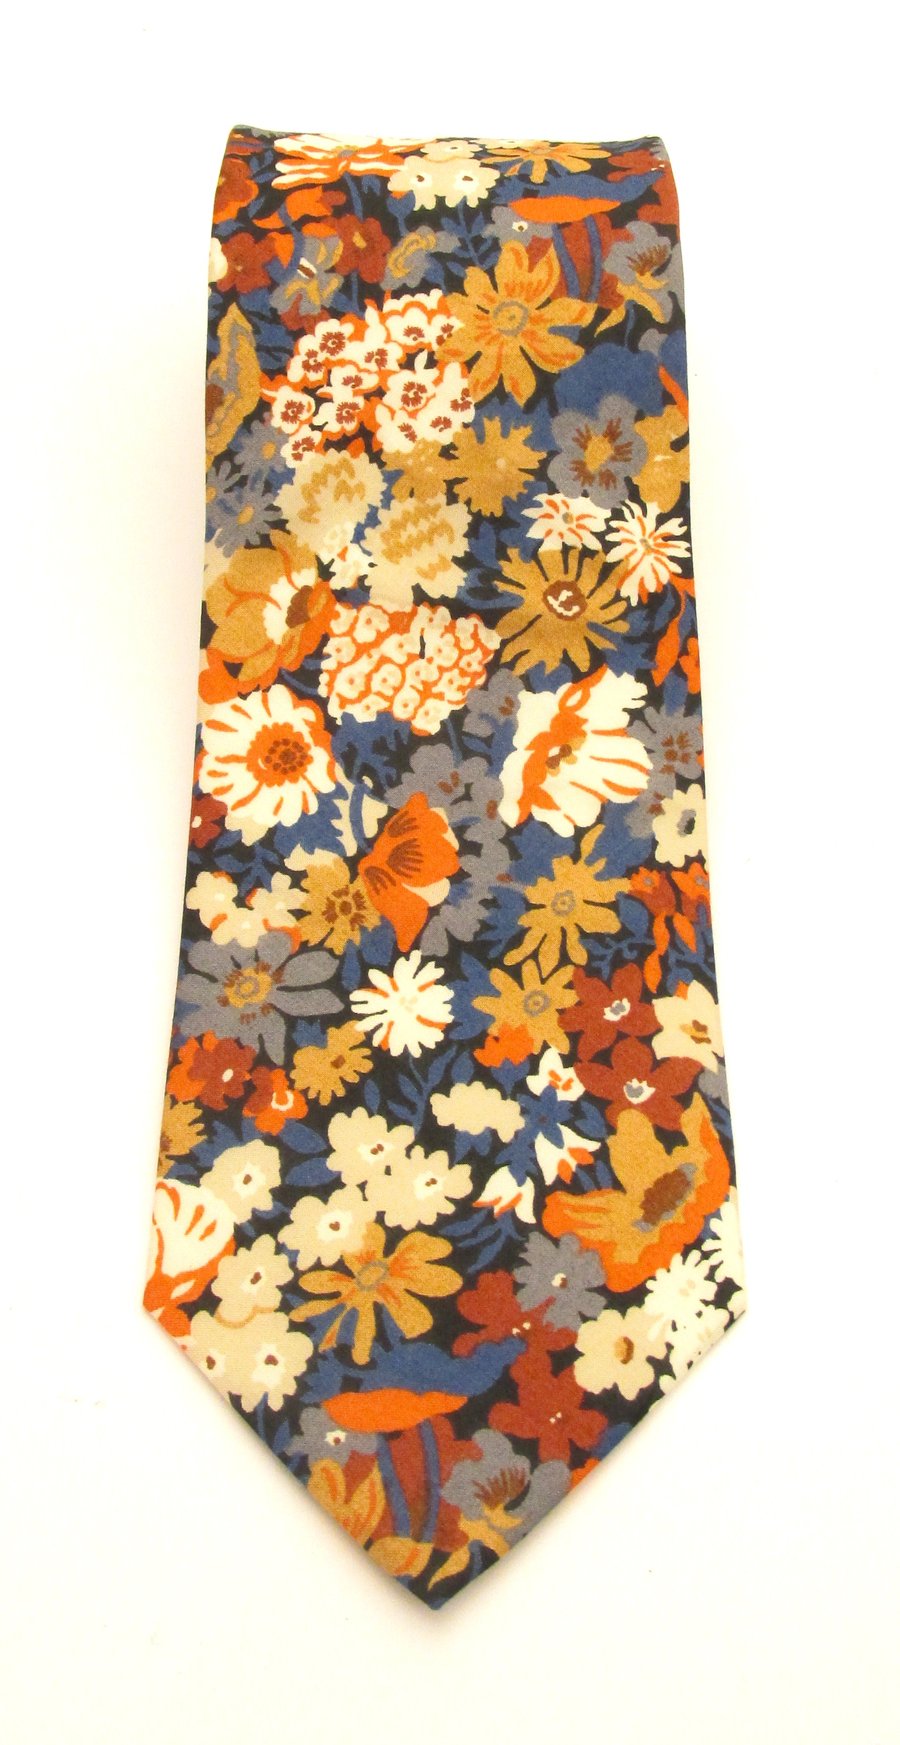 Thorpe Orange Liberty fabric tie by Van Buck